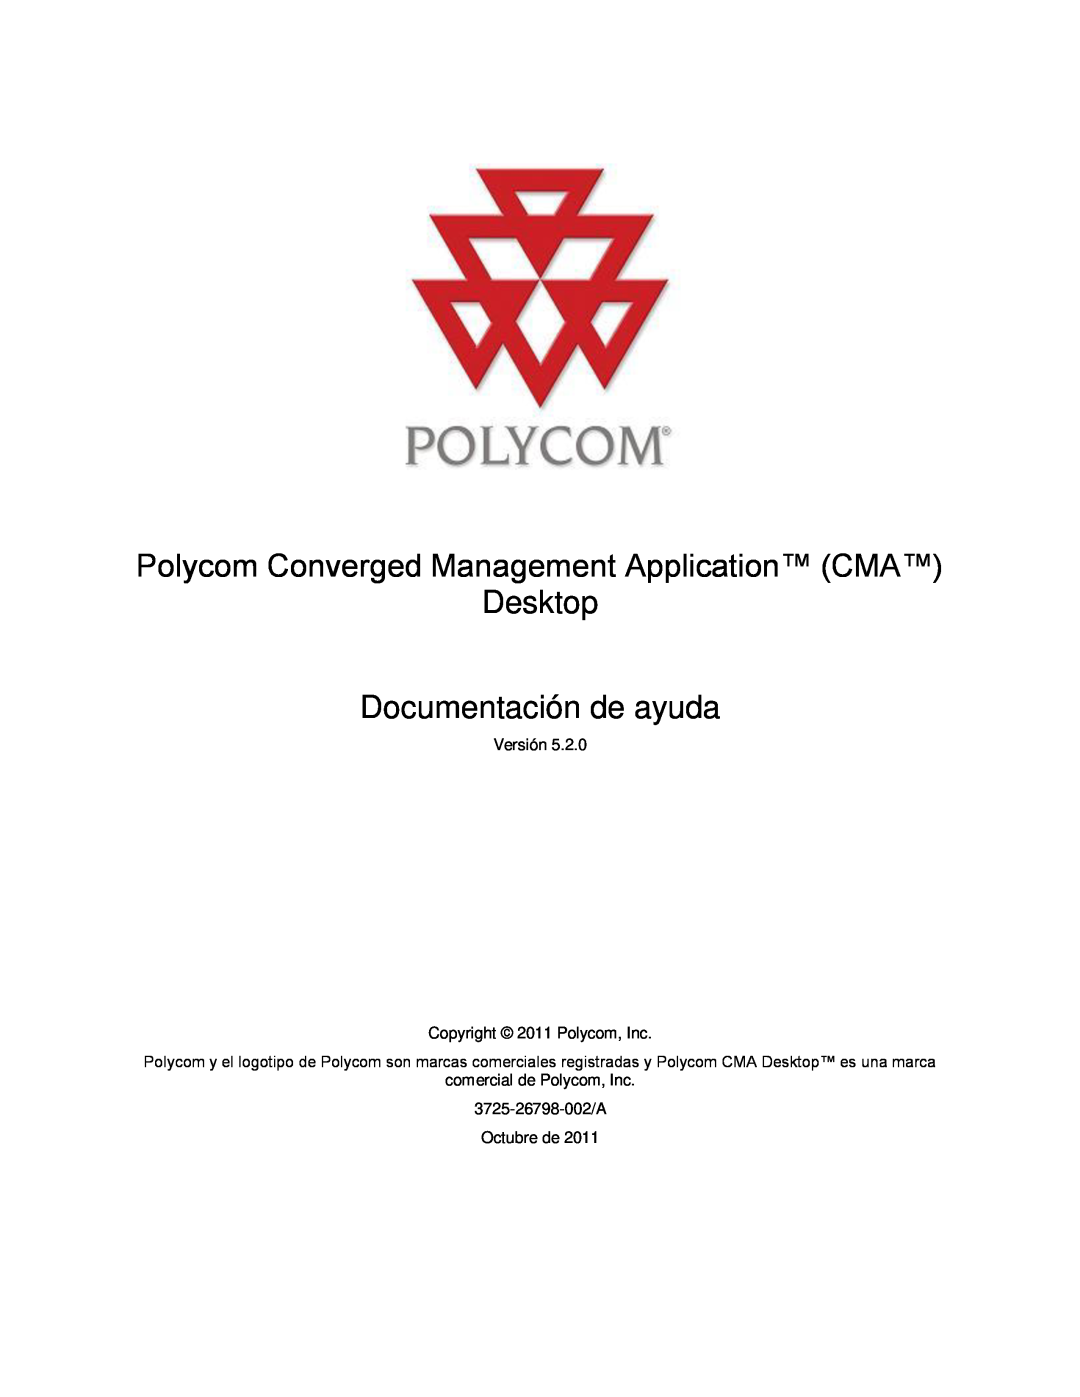 Polycom 3725-26798-002 manual Polycom Converged Management Application CMA Desktop, Documentación de ayuda 